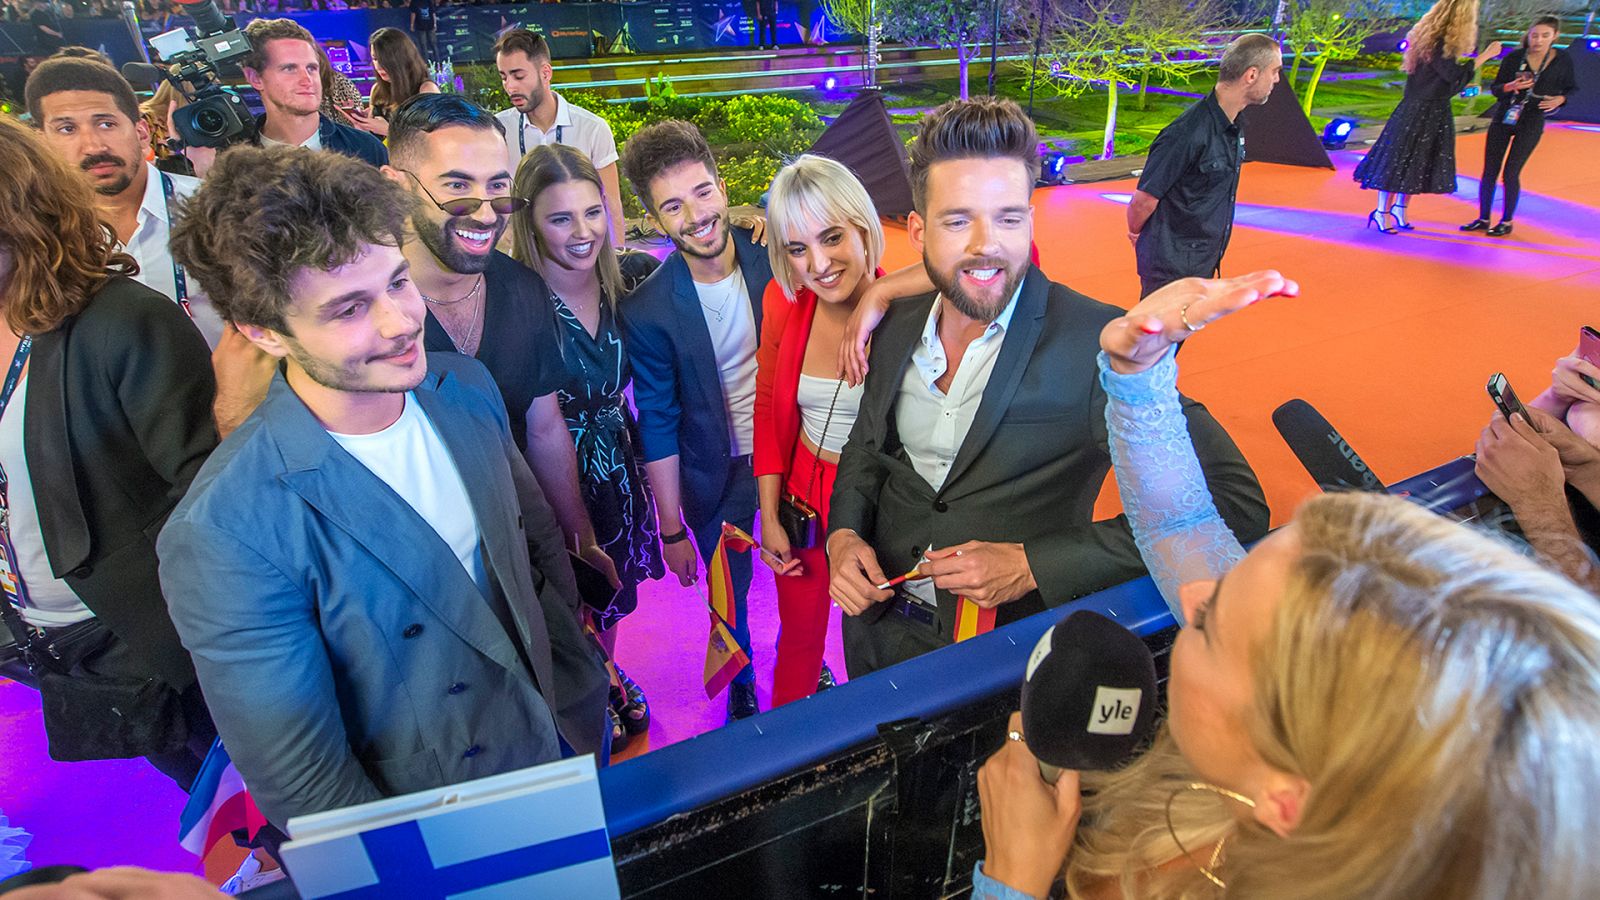 Eurovisión 2019 - La Welcome Party da comienzo a Eurovisión 2019 con la alfombra naranja